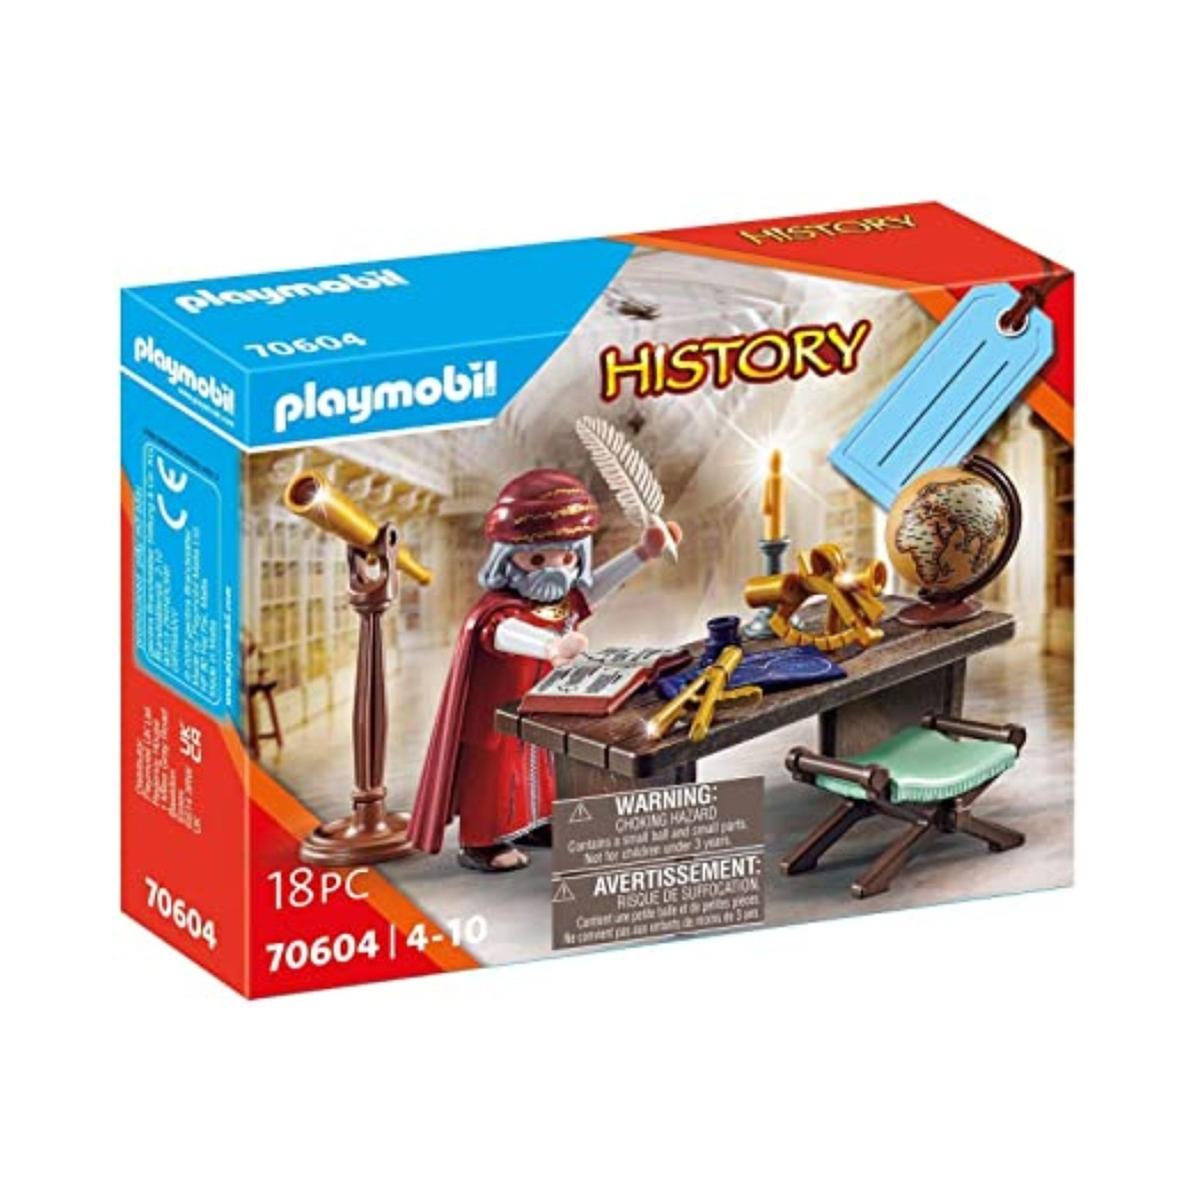 Playmobil - Set astrónomo - 70604 | Historia | Toys"R"Us España